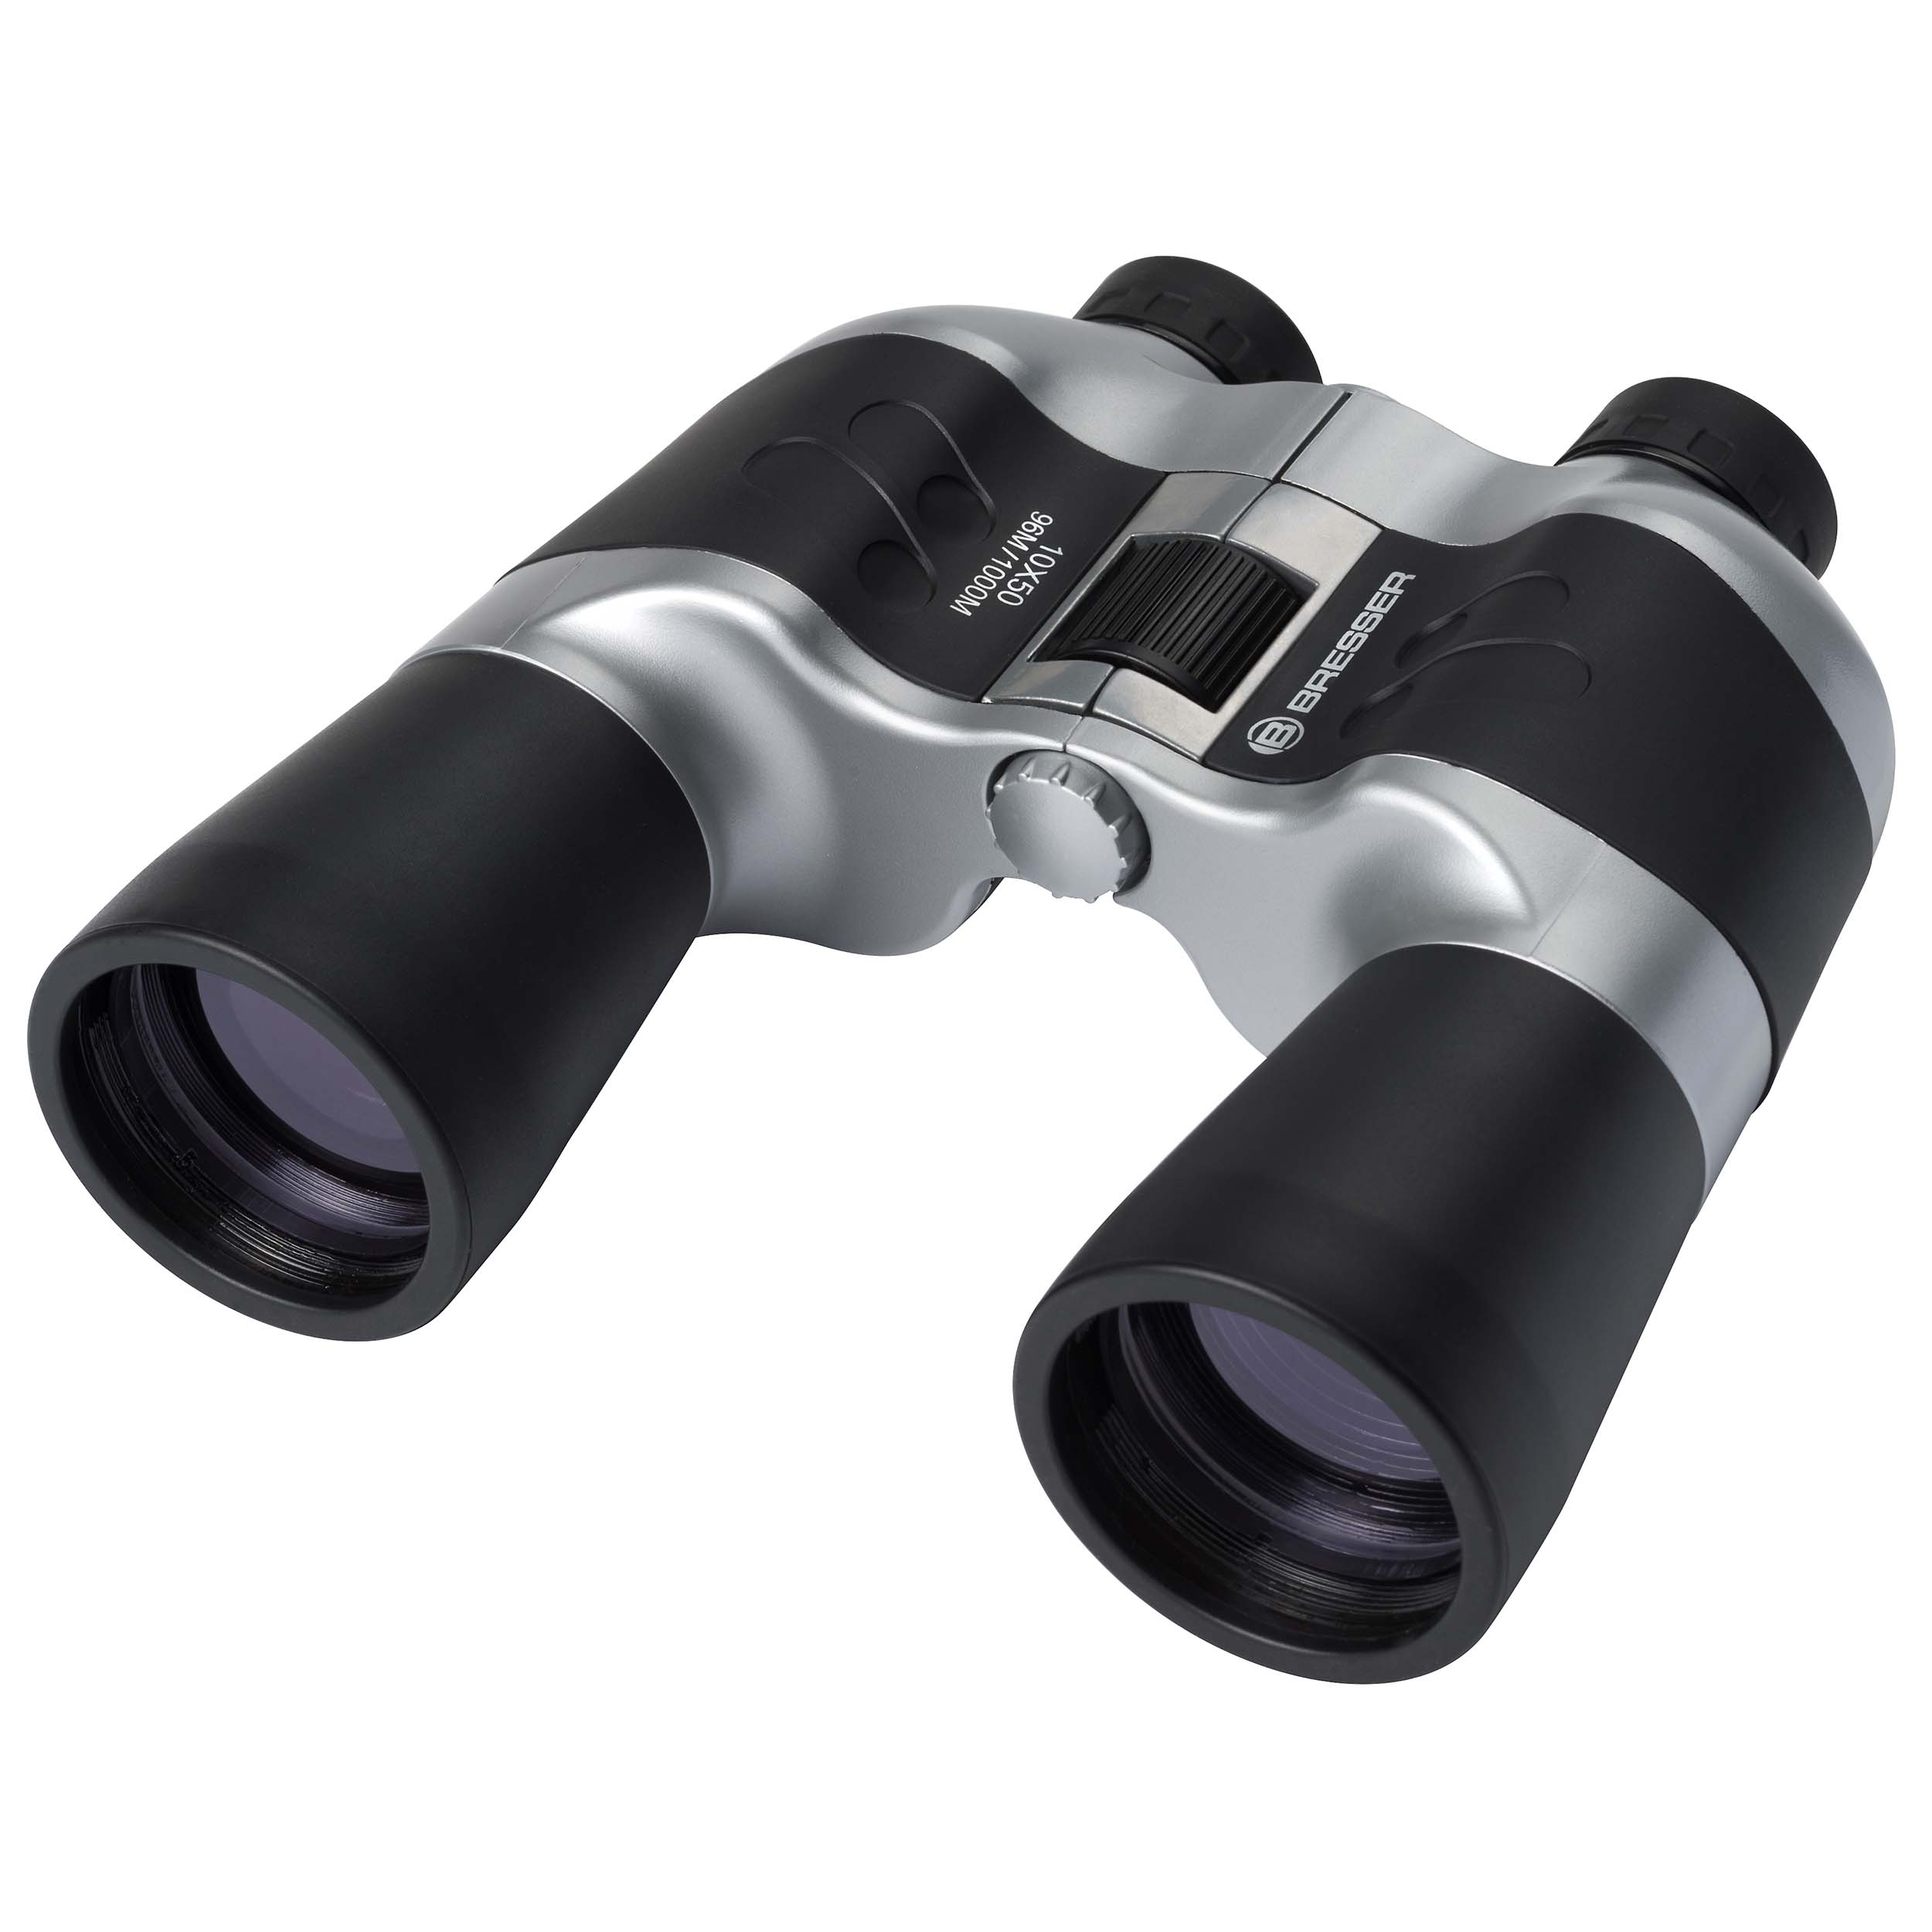 BRESSER 10x50 Porro-prism binoculars